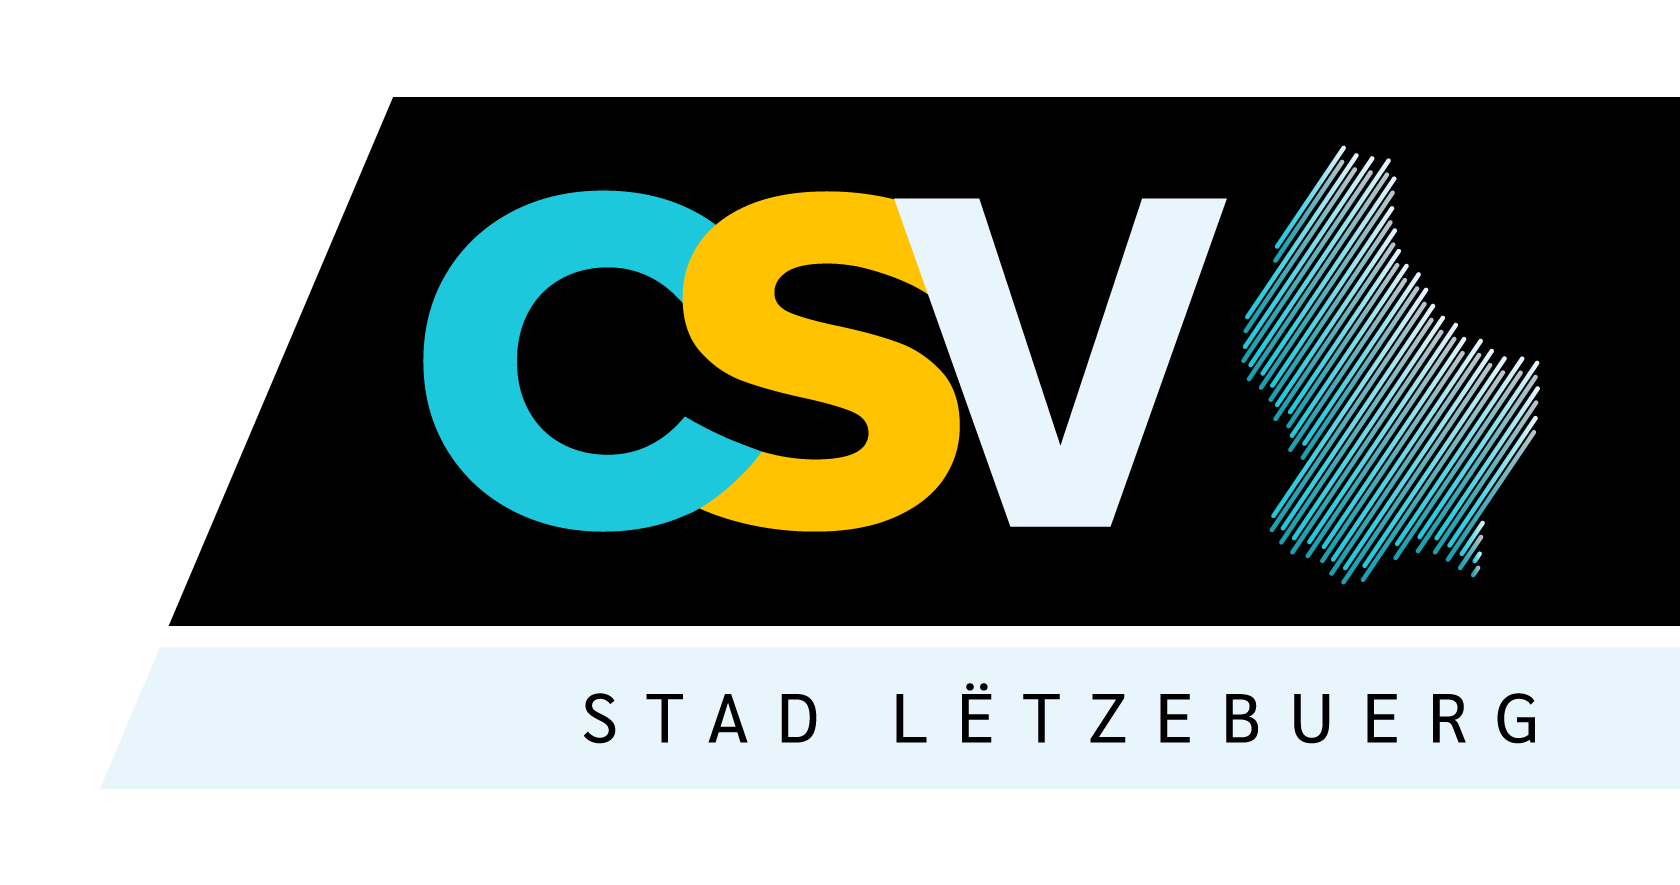 CSV Stad Lëtzebuerg